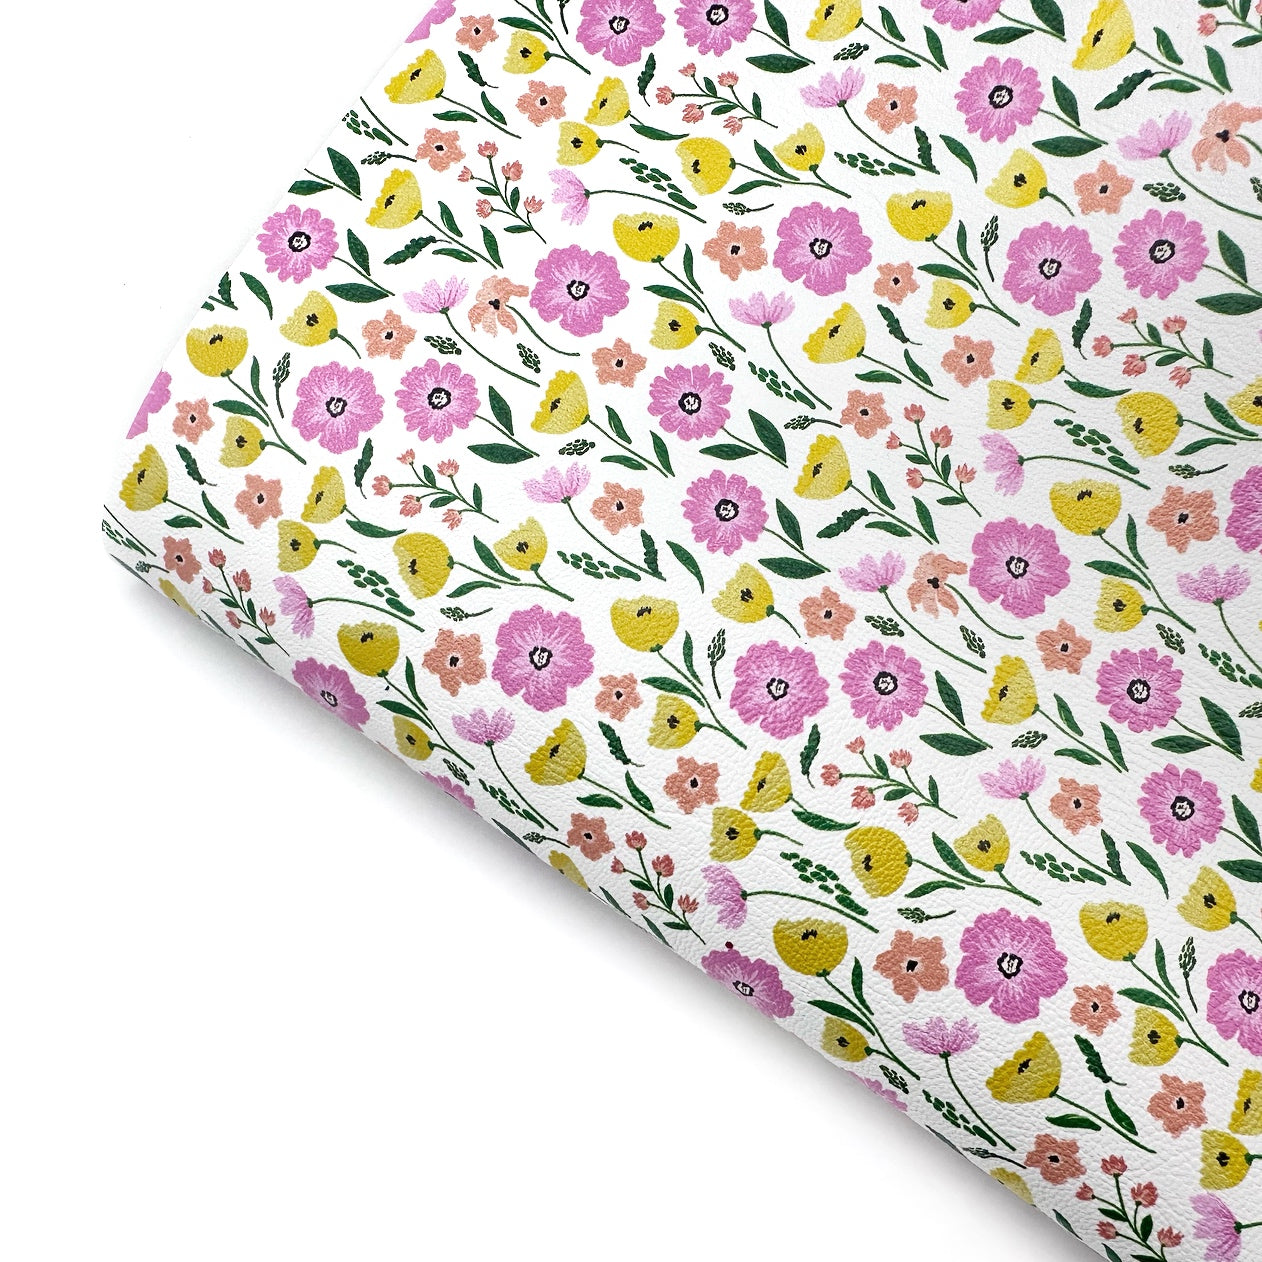 Summer Lovin’ Florals Premium Faux Leather Fabric Sheets